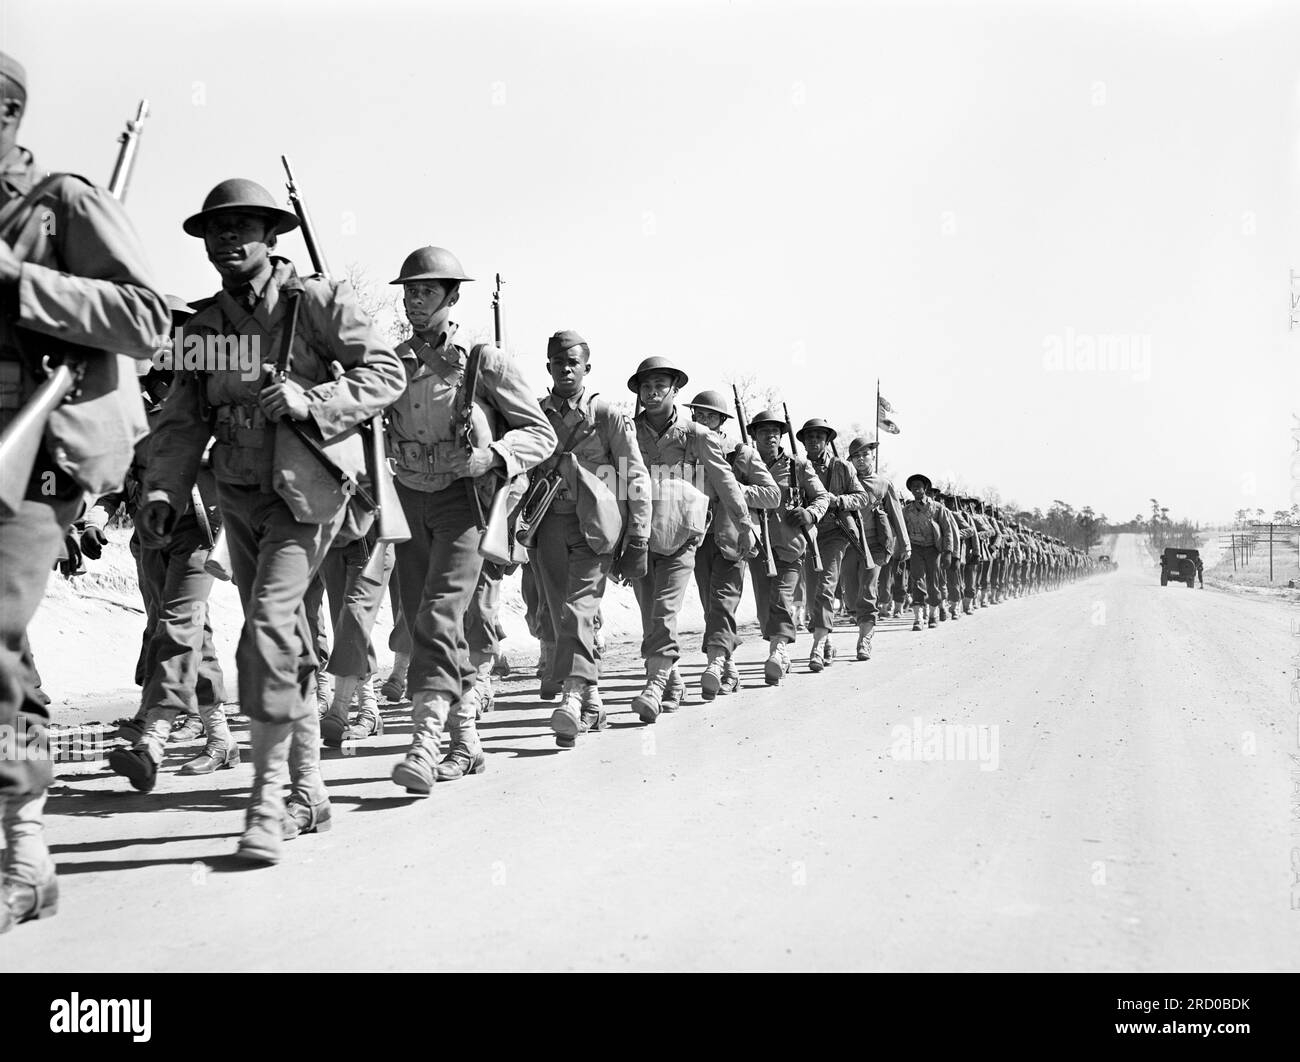 Soldats du 41e génie en mars, fort Bragg, Caroline du Nord, USA, Arthur Rothstein, ÉTATS-UNIS Office of War information, mars 1942 Banque D'Images